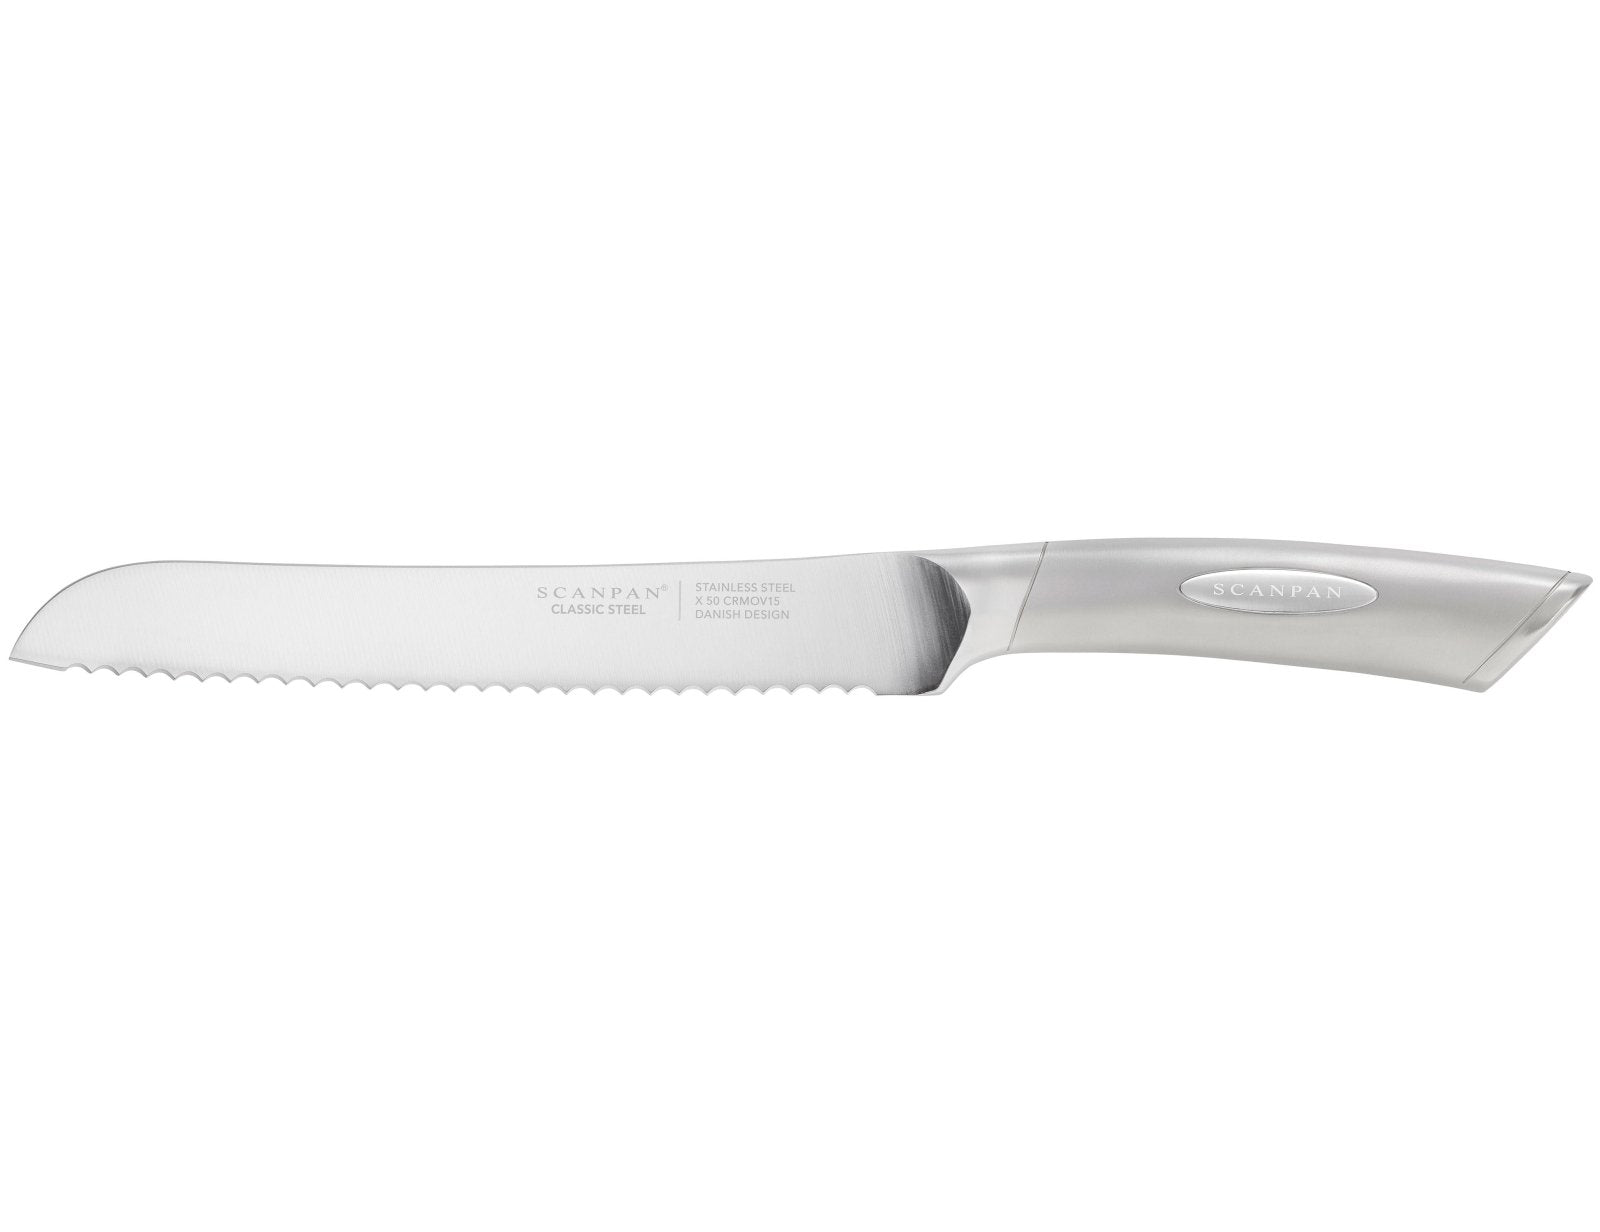 Scanpan Classic Steel 20cm Bread Knife - SP9001352000 - The Cotswold Knife Company